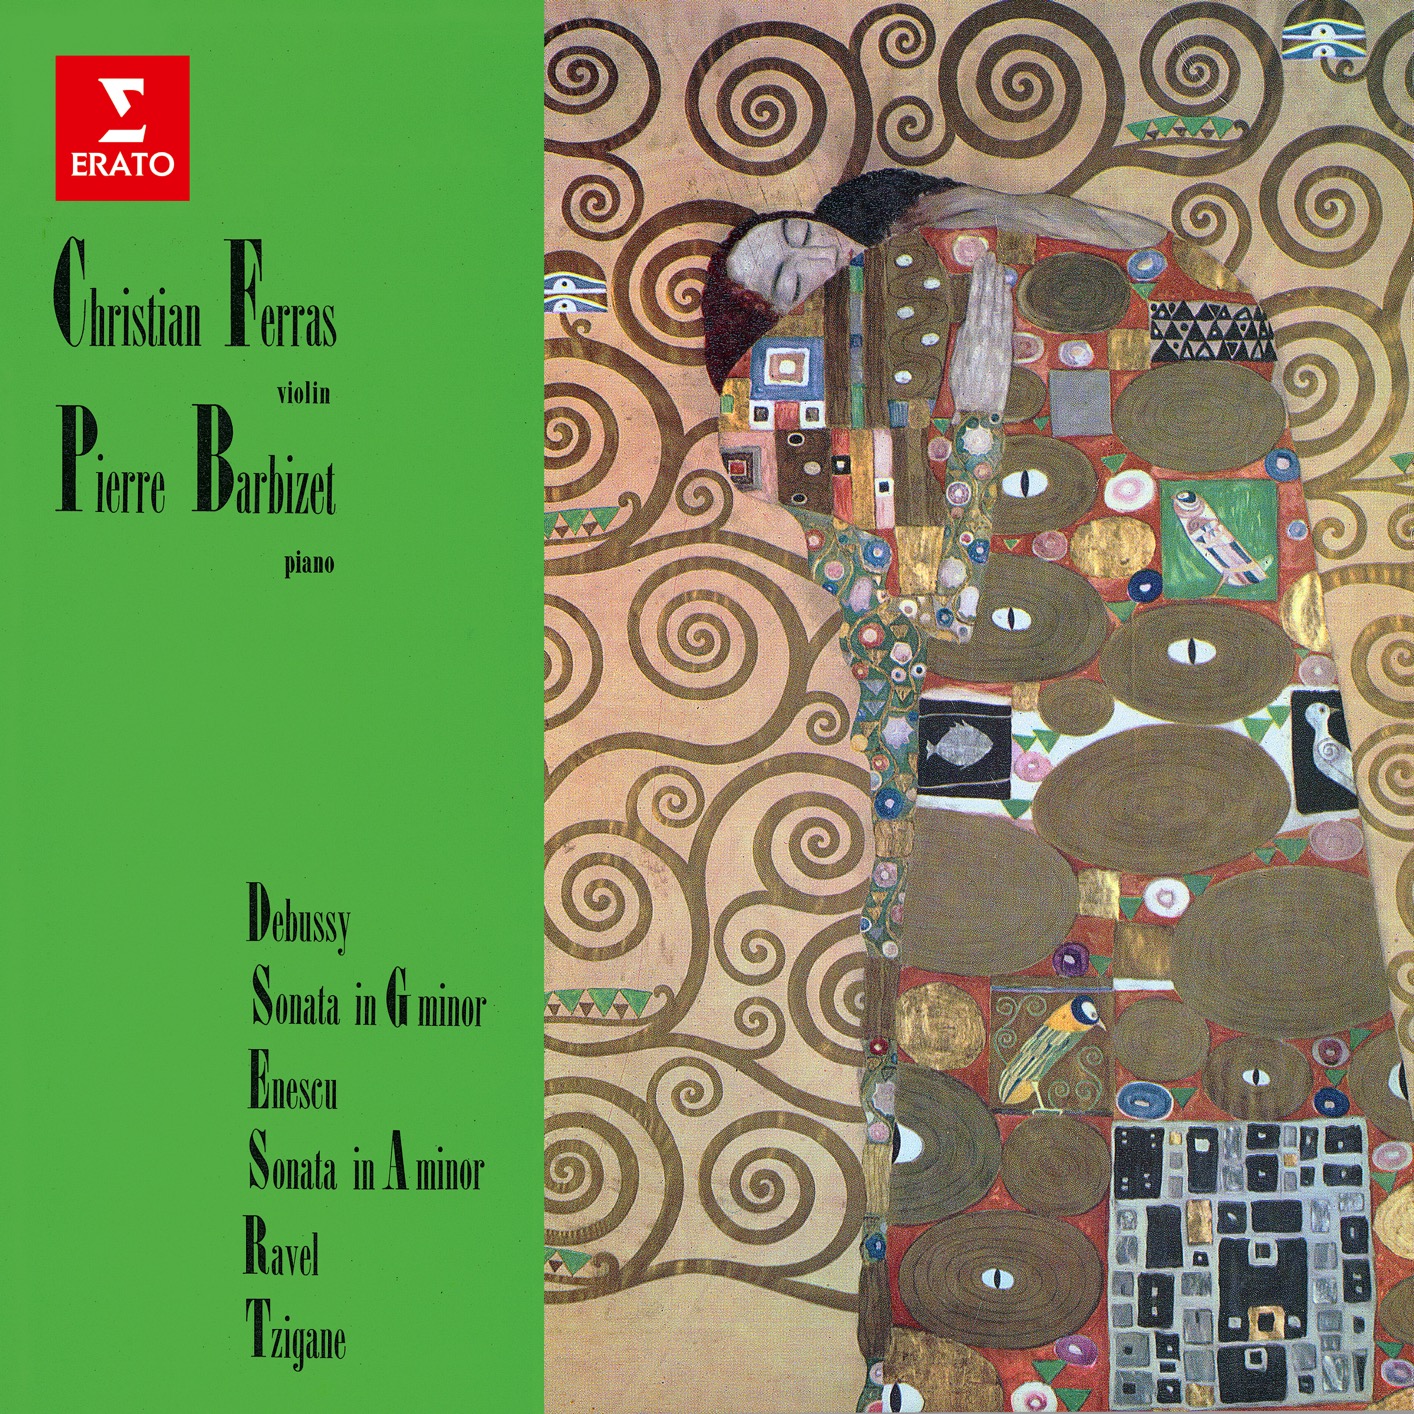 Christian Ferras & Pierre Barbizet - Debussy & Enescu: Violin Sonatas - Ravel: Tzigane (Remastered) (1962/2020) [FLAC 24bit/96kHz]